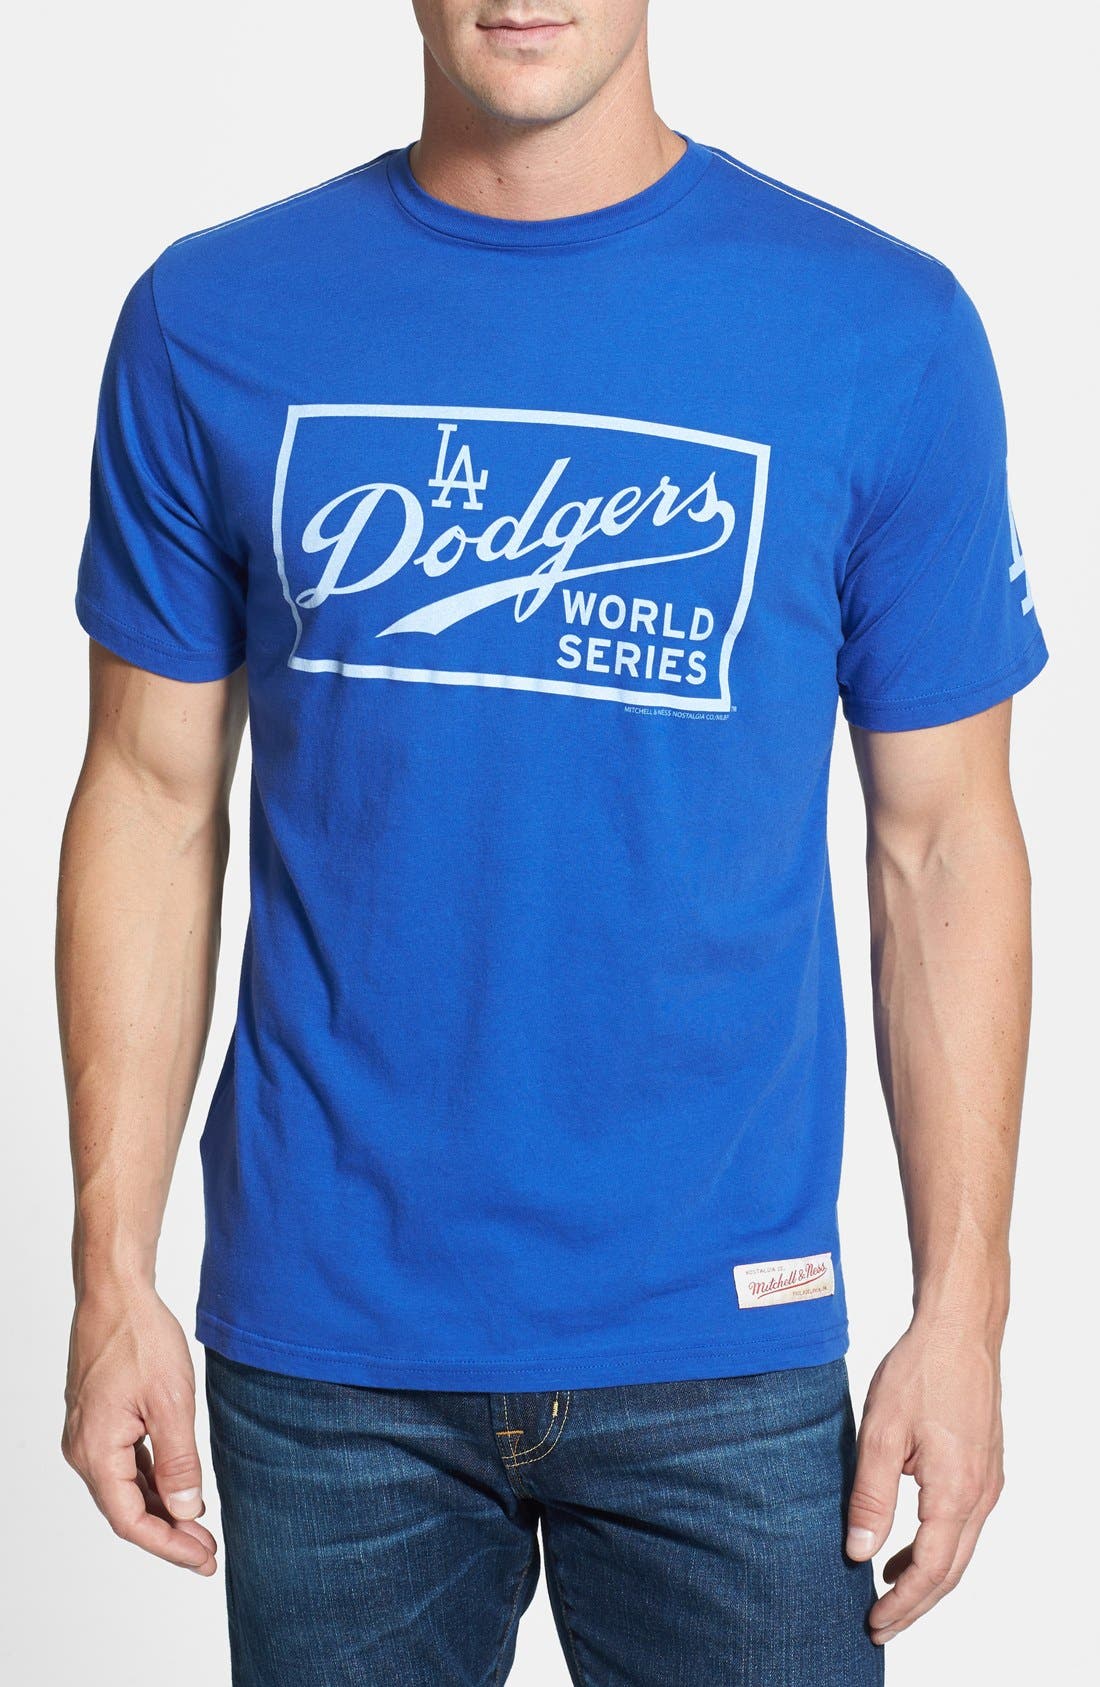 la dodgers t shirts free shipping